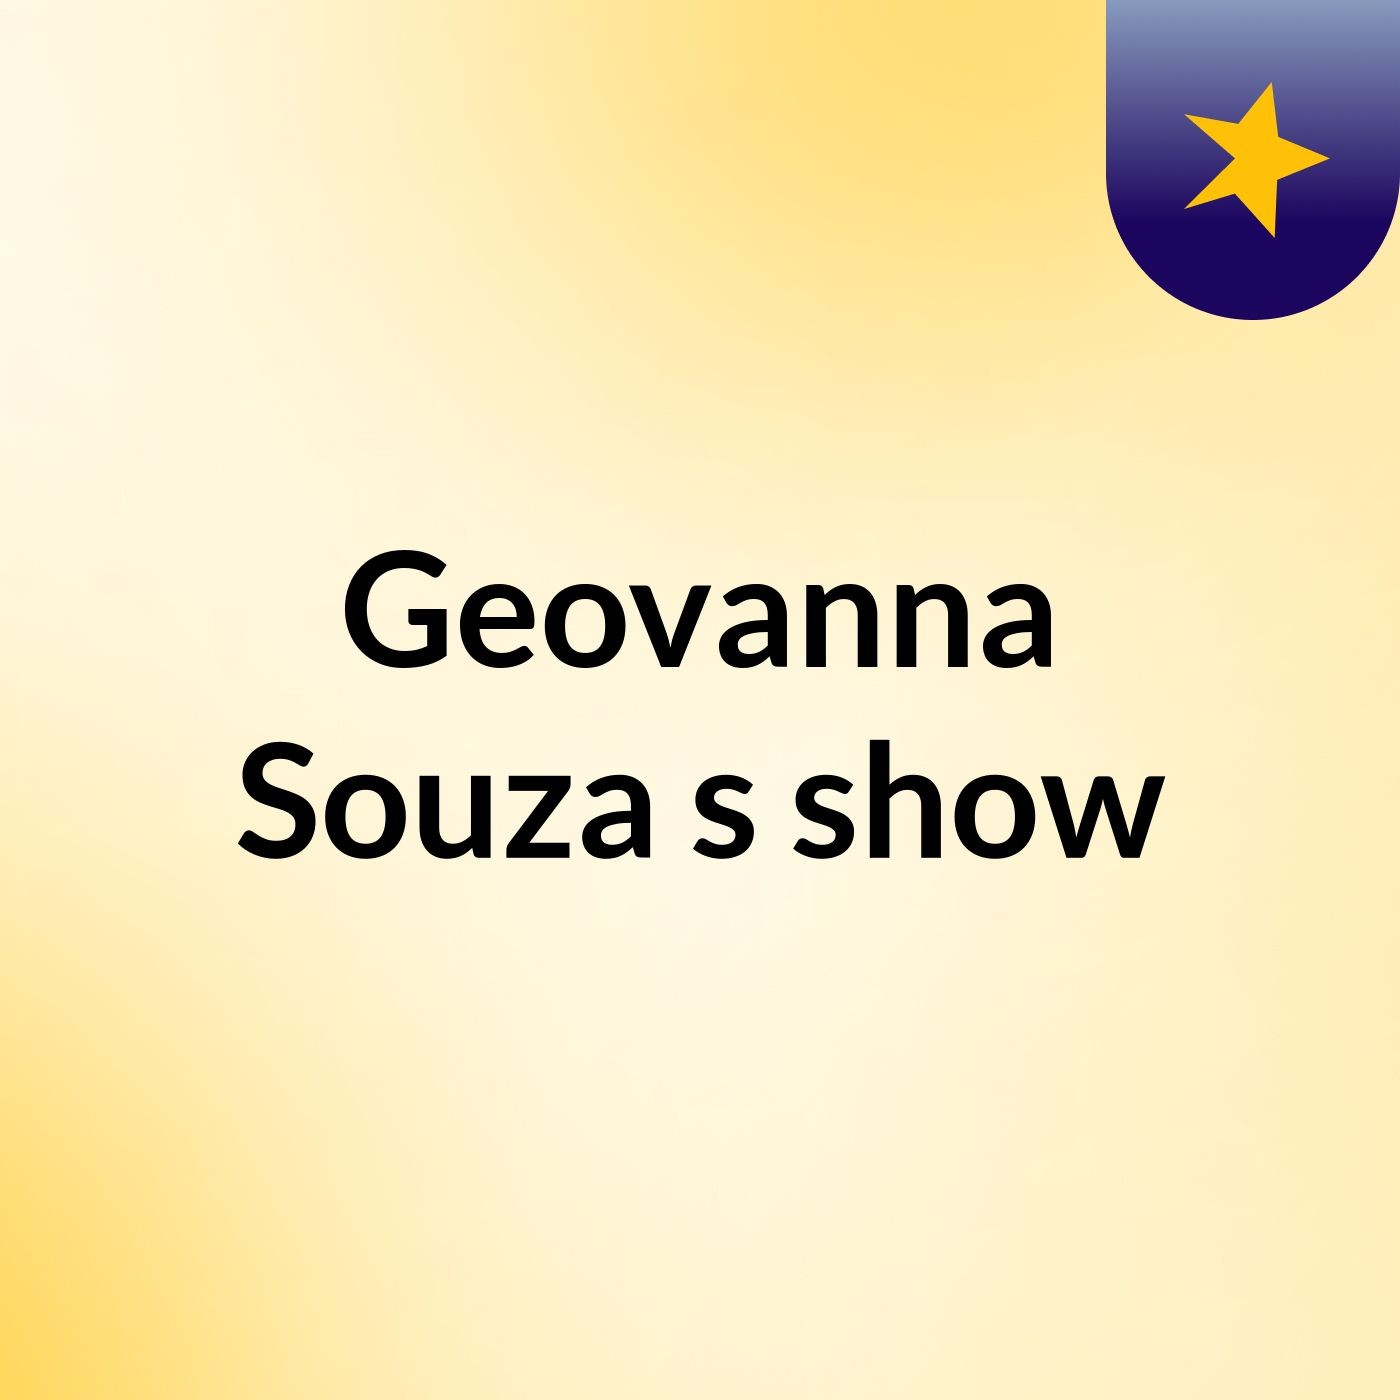 Geovanna Souza's show